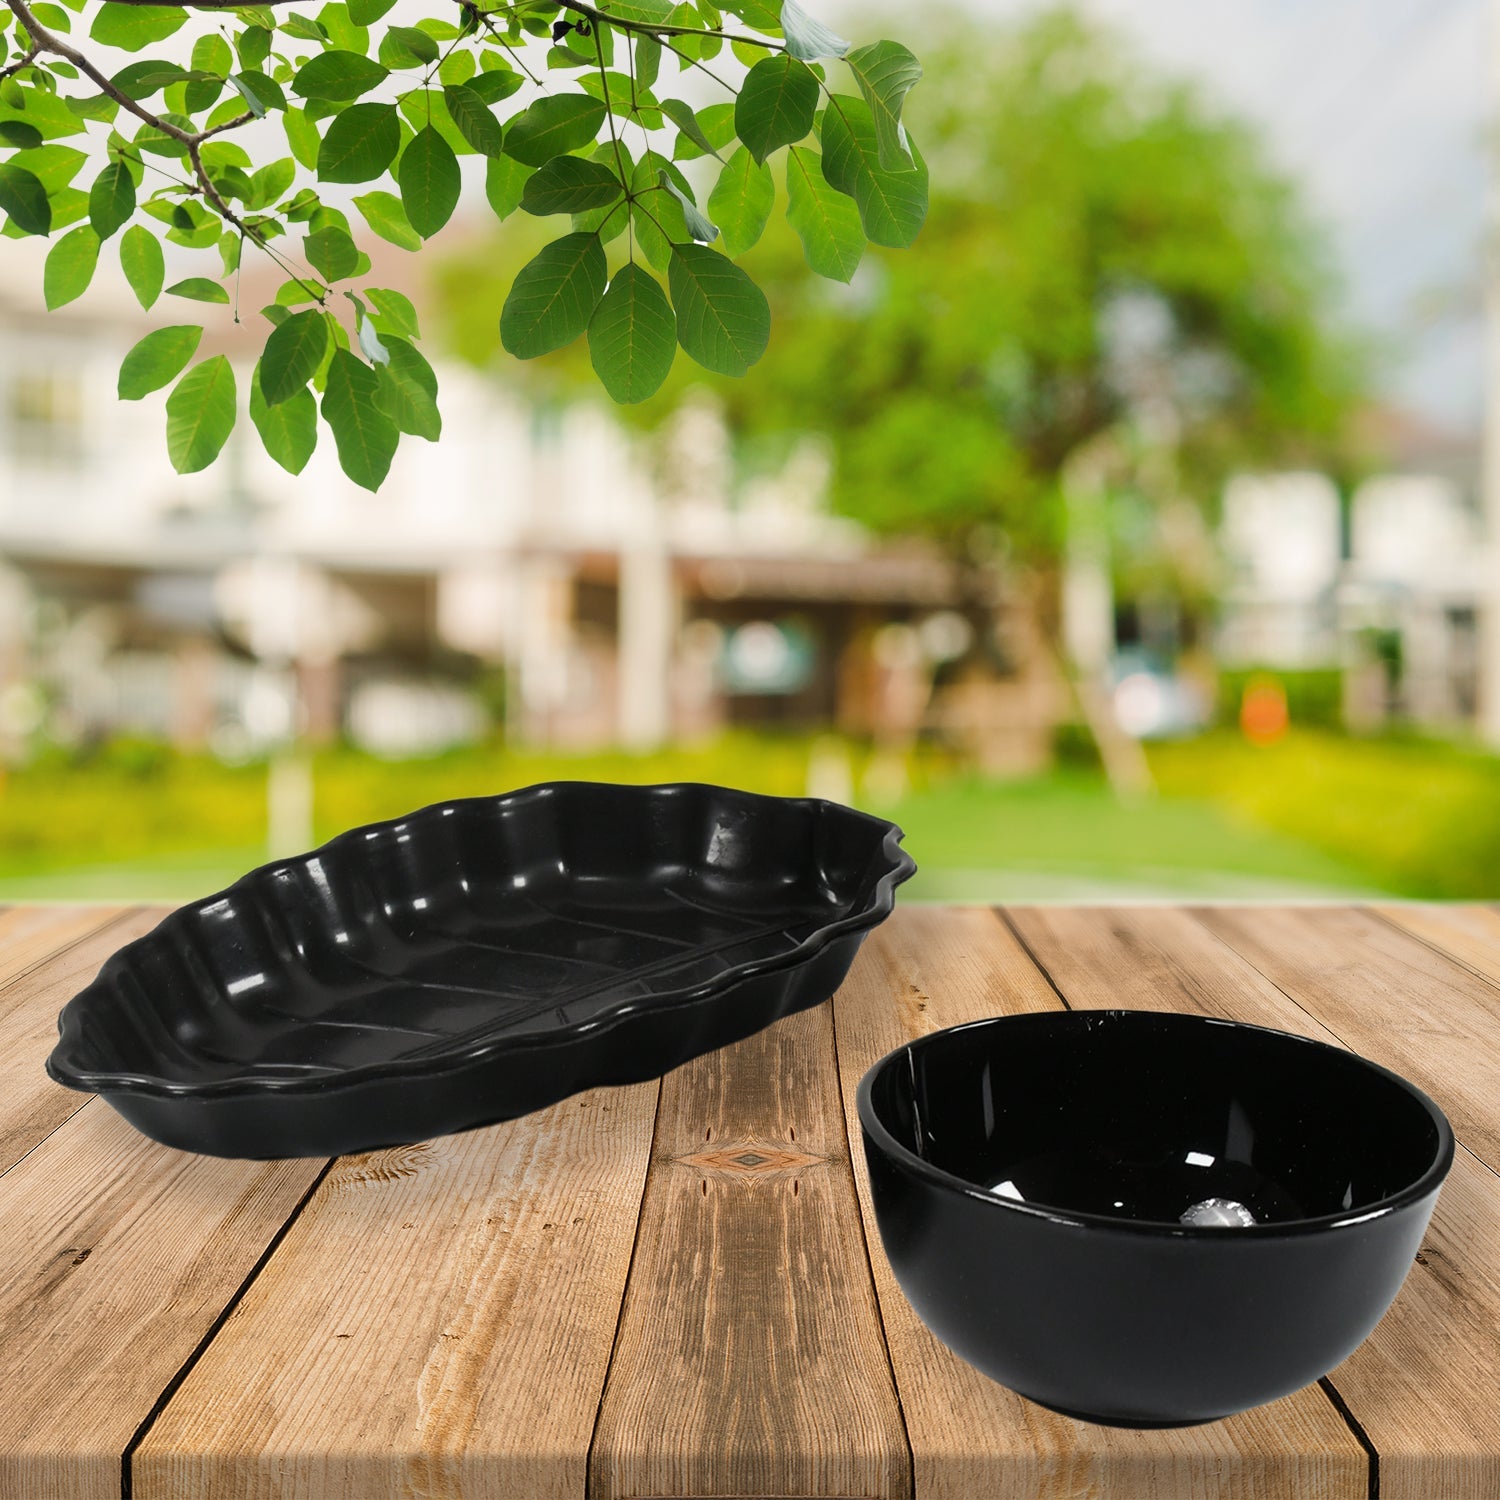 8233 Invitation Round Ceramic Snacks Bowl With Plastic Leaf shape Serving platter Portable, Lightweight Breakfast, Serving Bowl | Ideal for Rice, Pasta, Desserts Home & Kitchen Serving Bowl & platter (8 Pcs set)